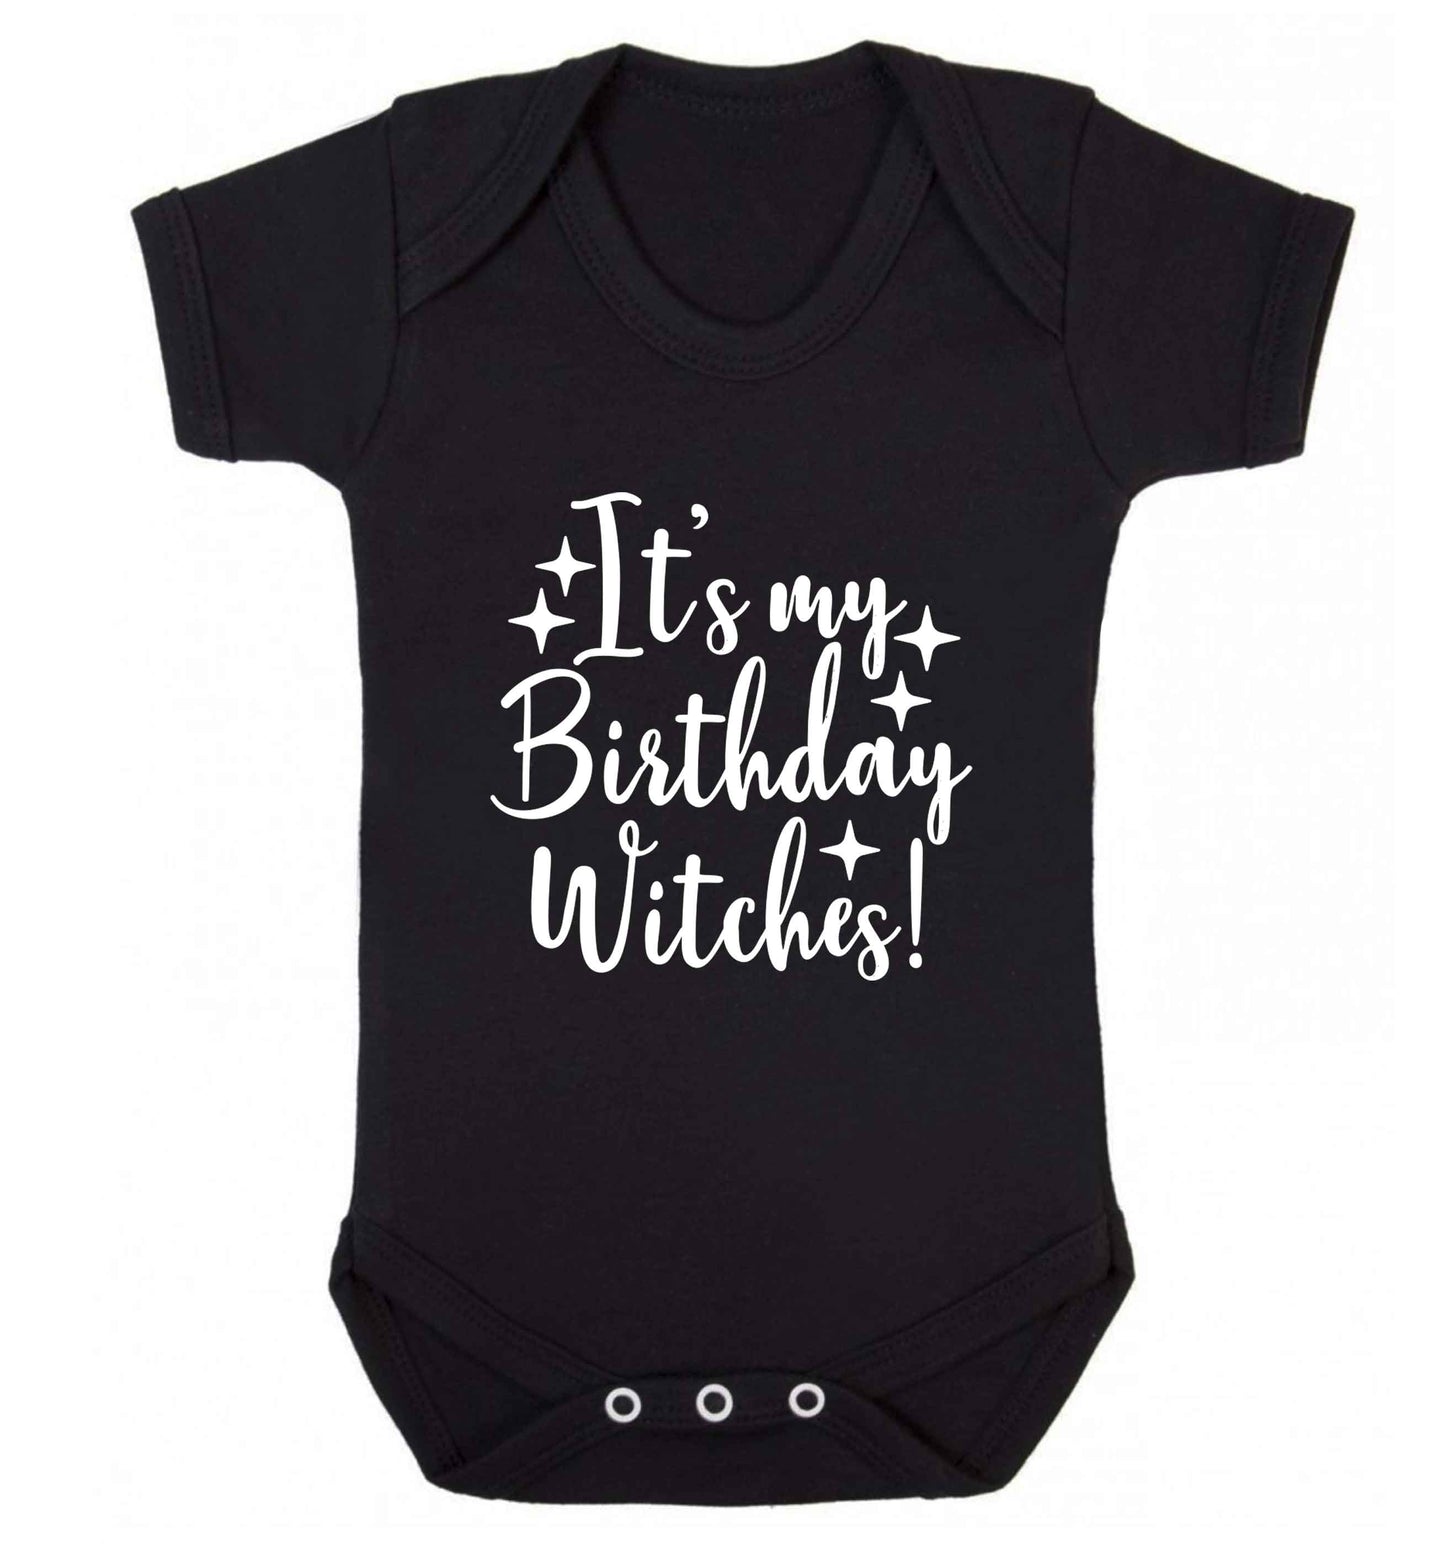 It's my birthday witches!baby vest black 18-24 months